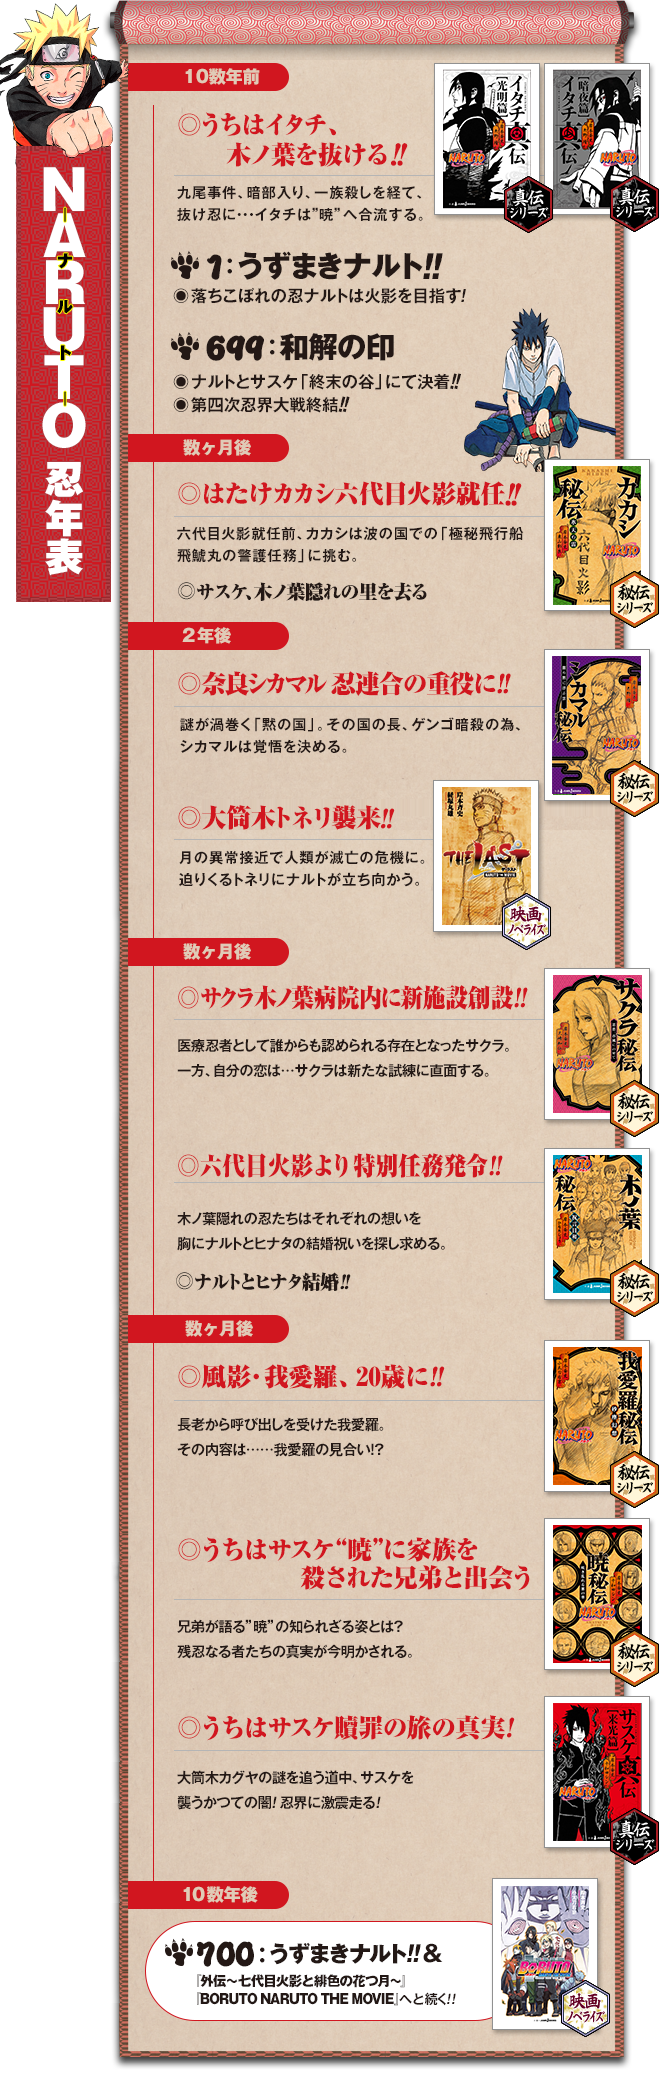 Rinnegan vs Tsukuyomi - Página 2 Latest?cb=20151214225041&path-prefix=pt-br